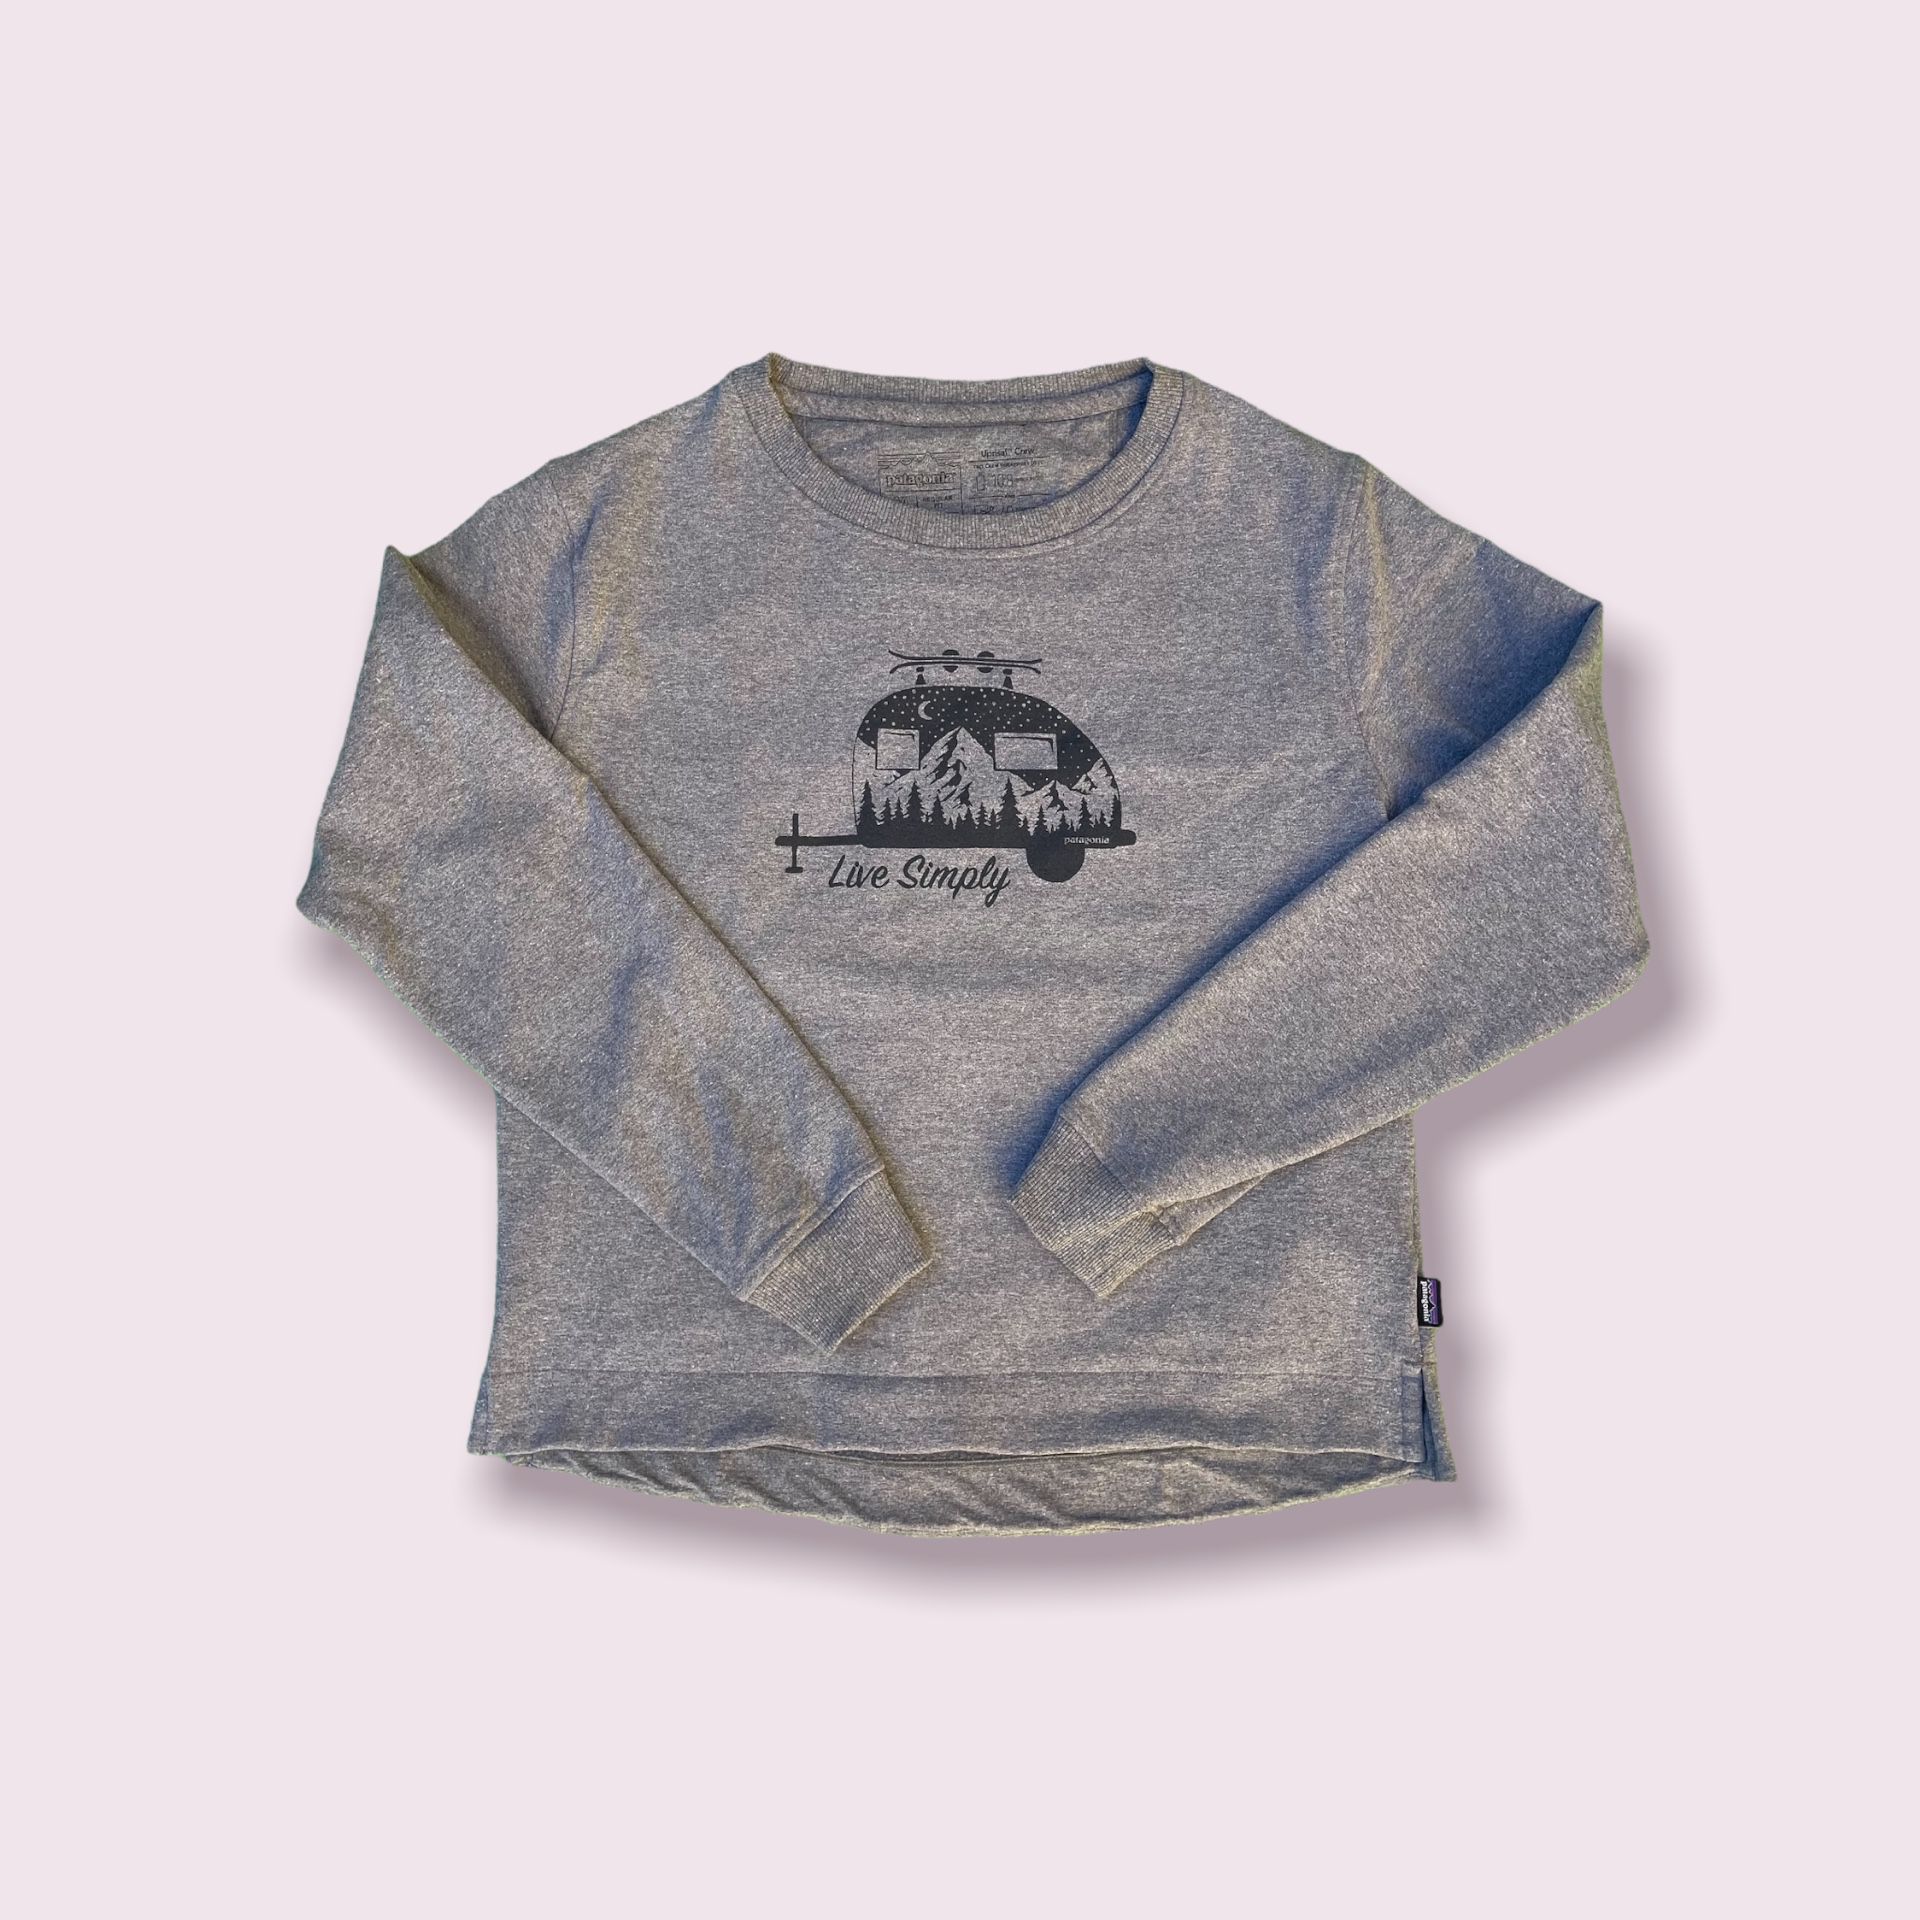 Patagonia Uprisal Crew Pullover Sweatshirt Live Simply Size Medium Blue/Gray